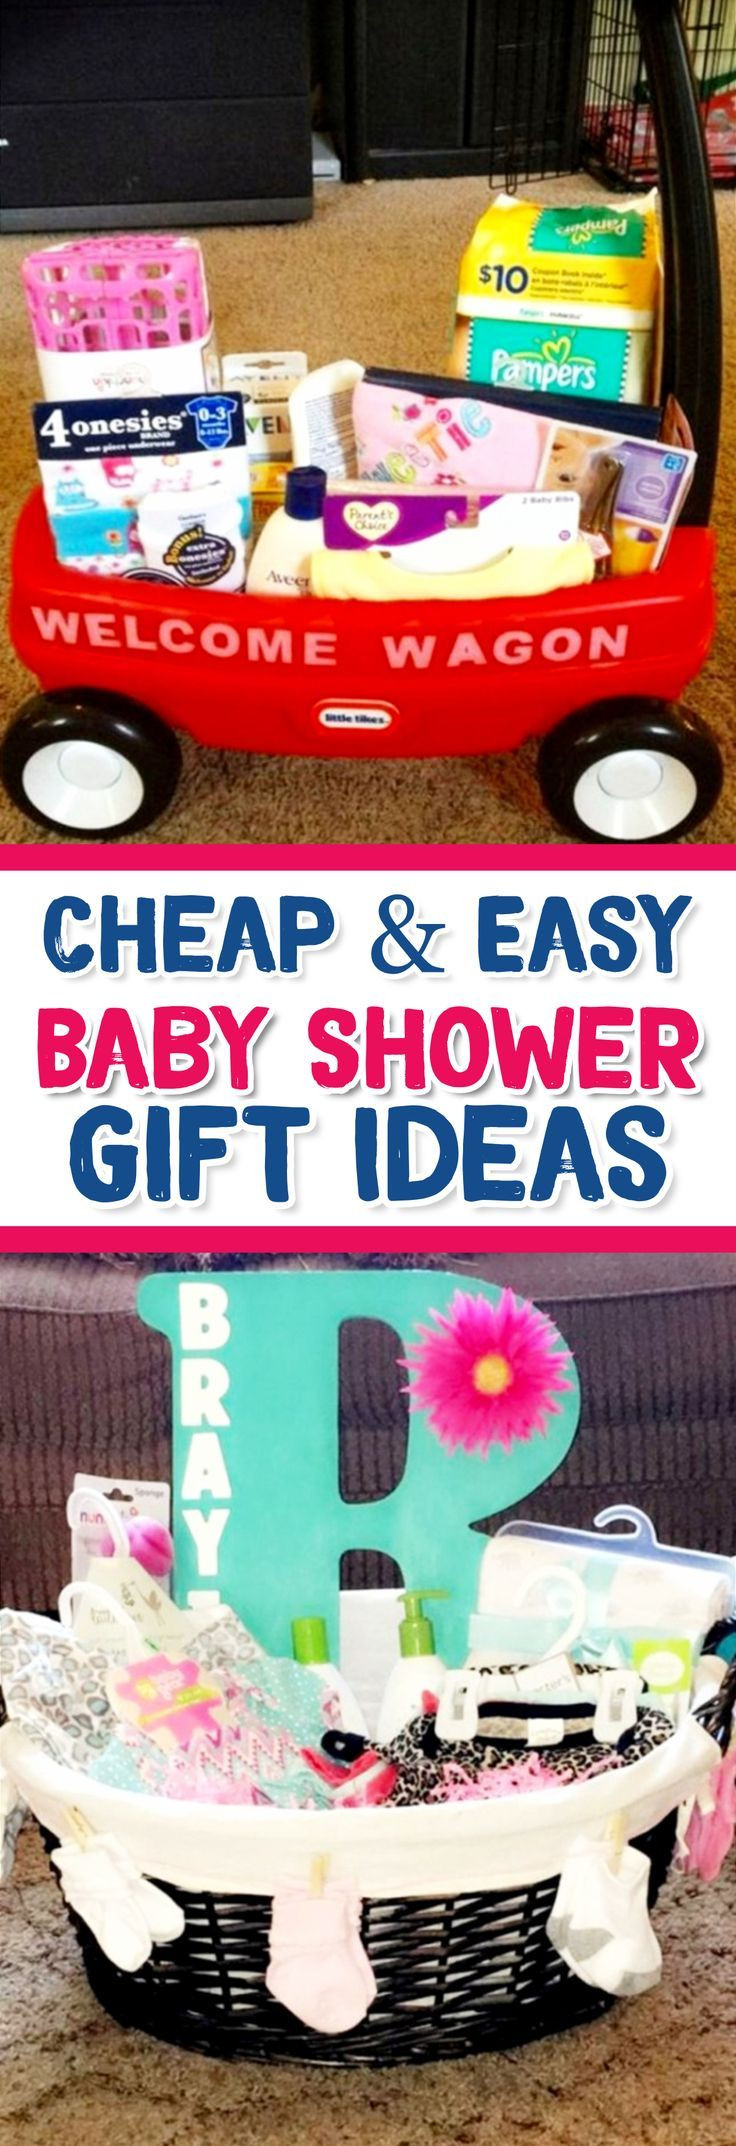 Cheap Baby Gift Ideas
 The 25 best Cheap baby shower ts ideas on Pinterest